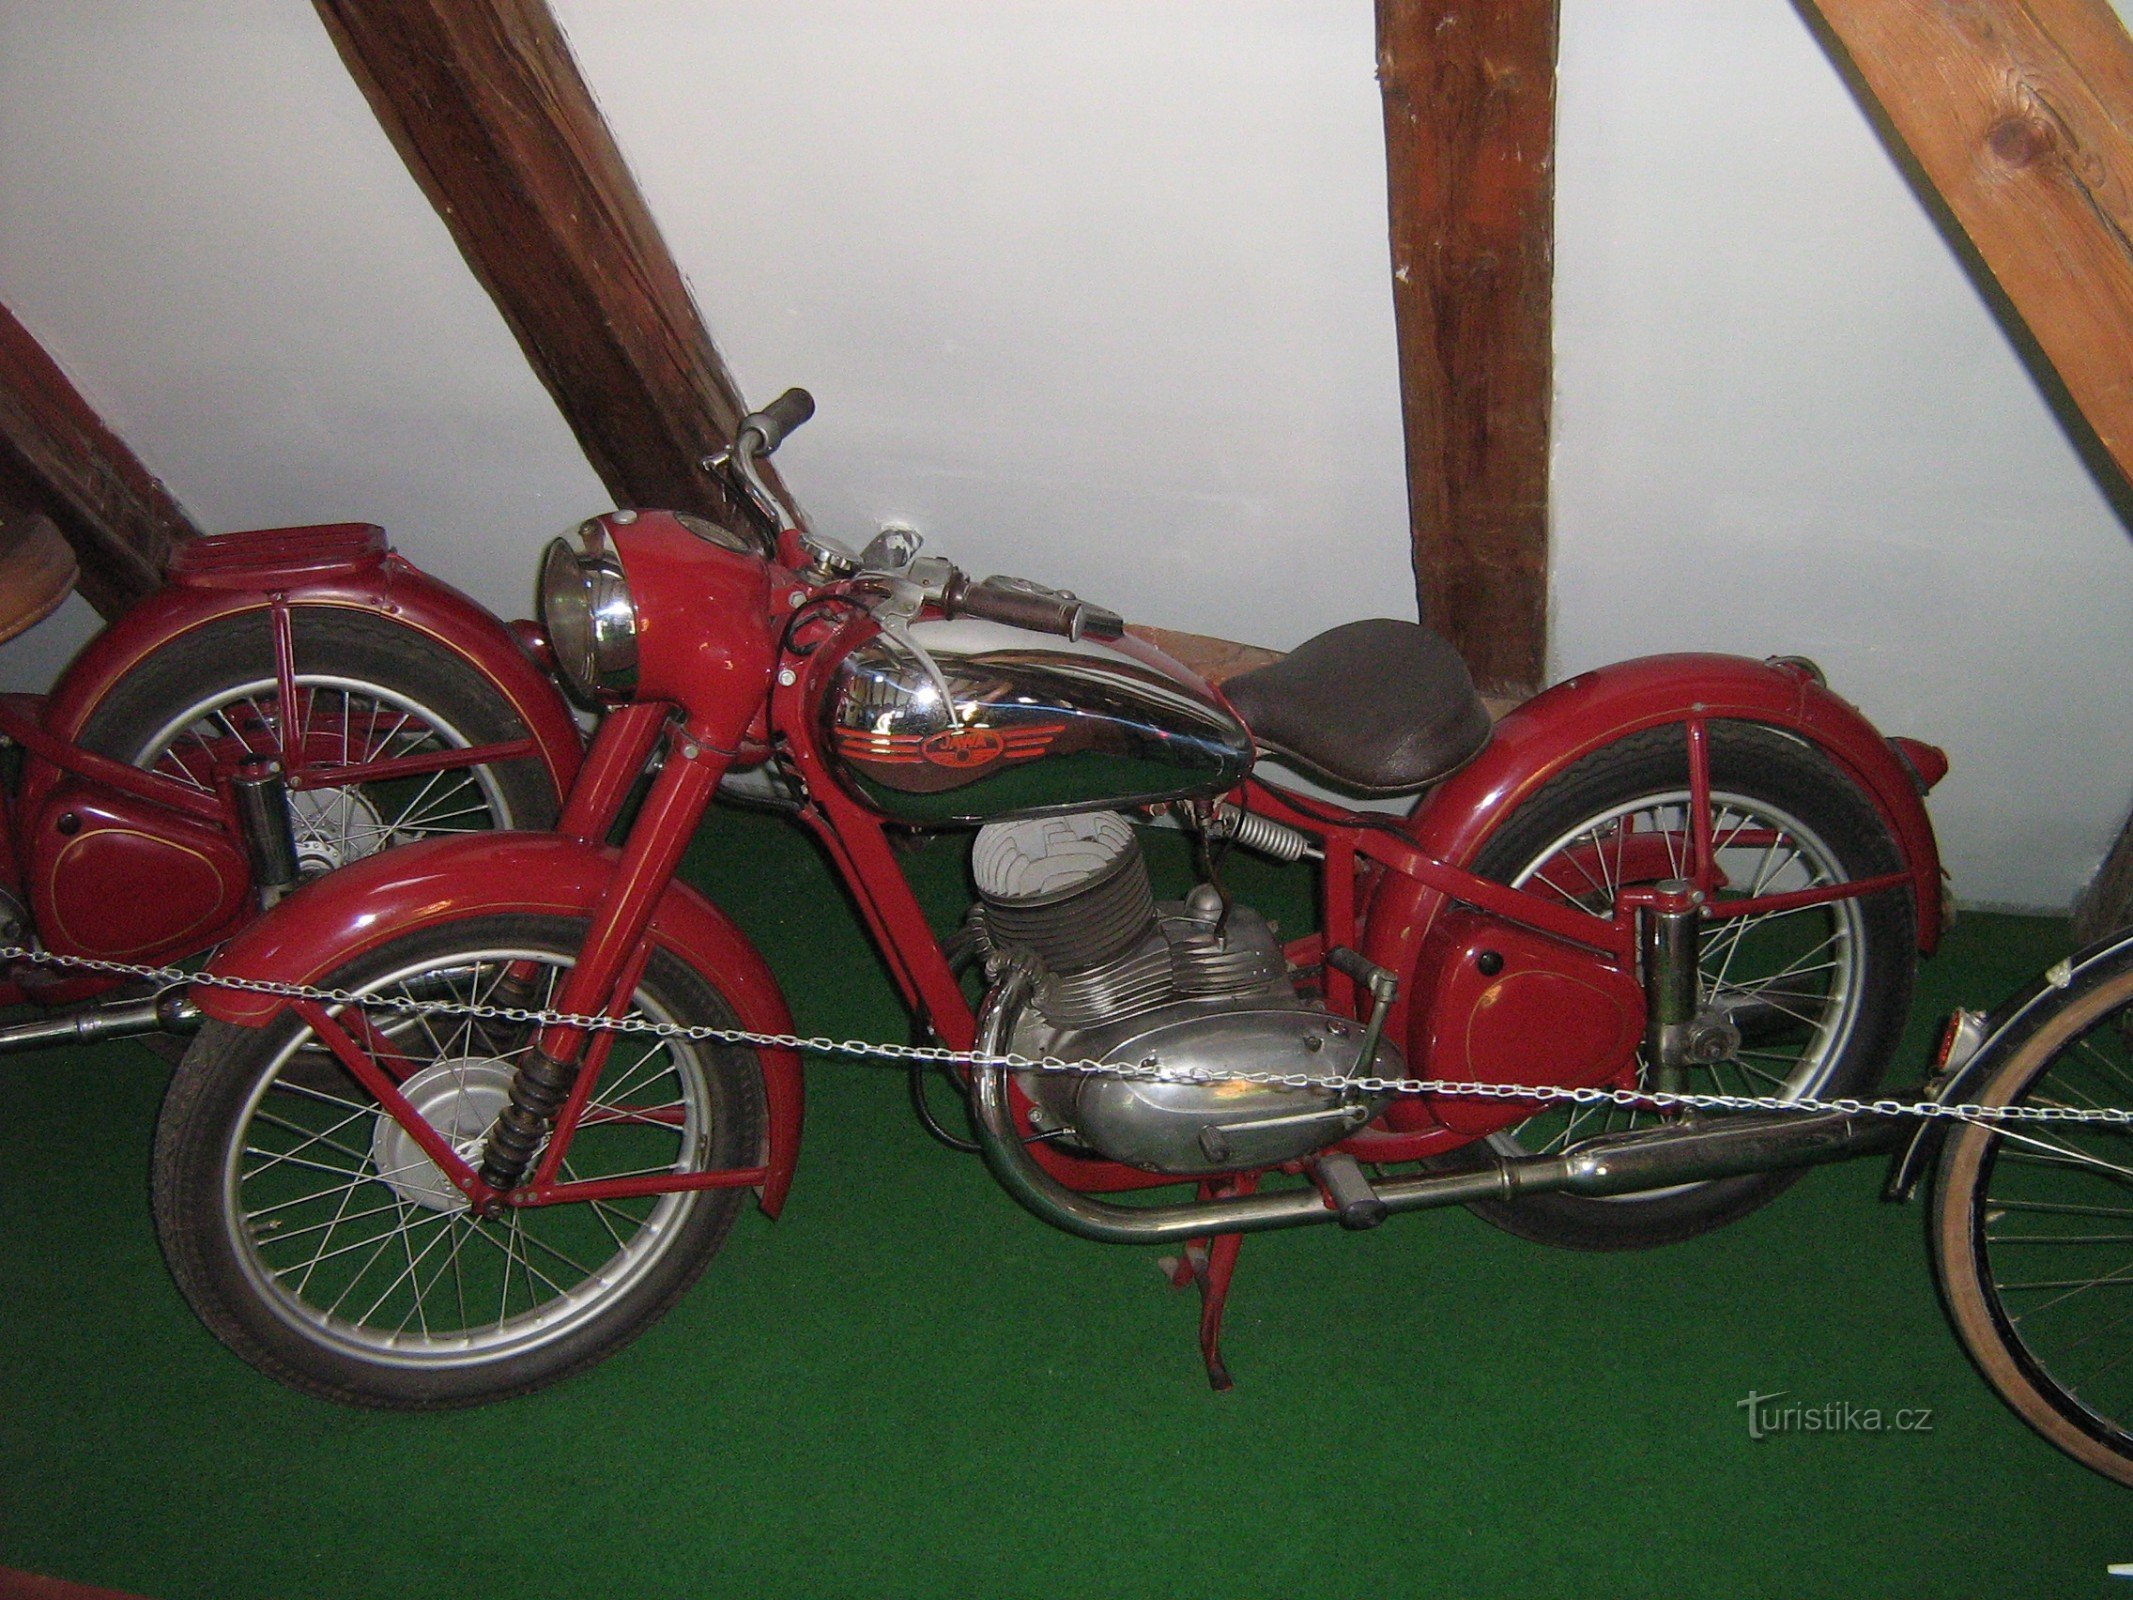 Museo della motocicletta Kašperská Hora